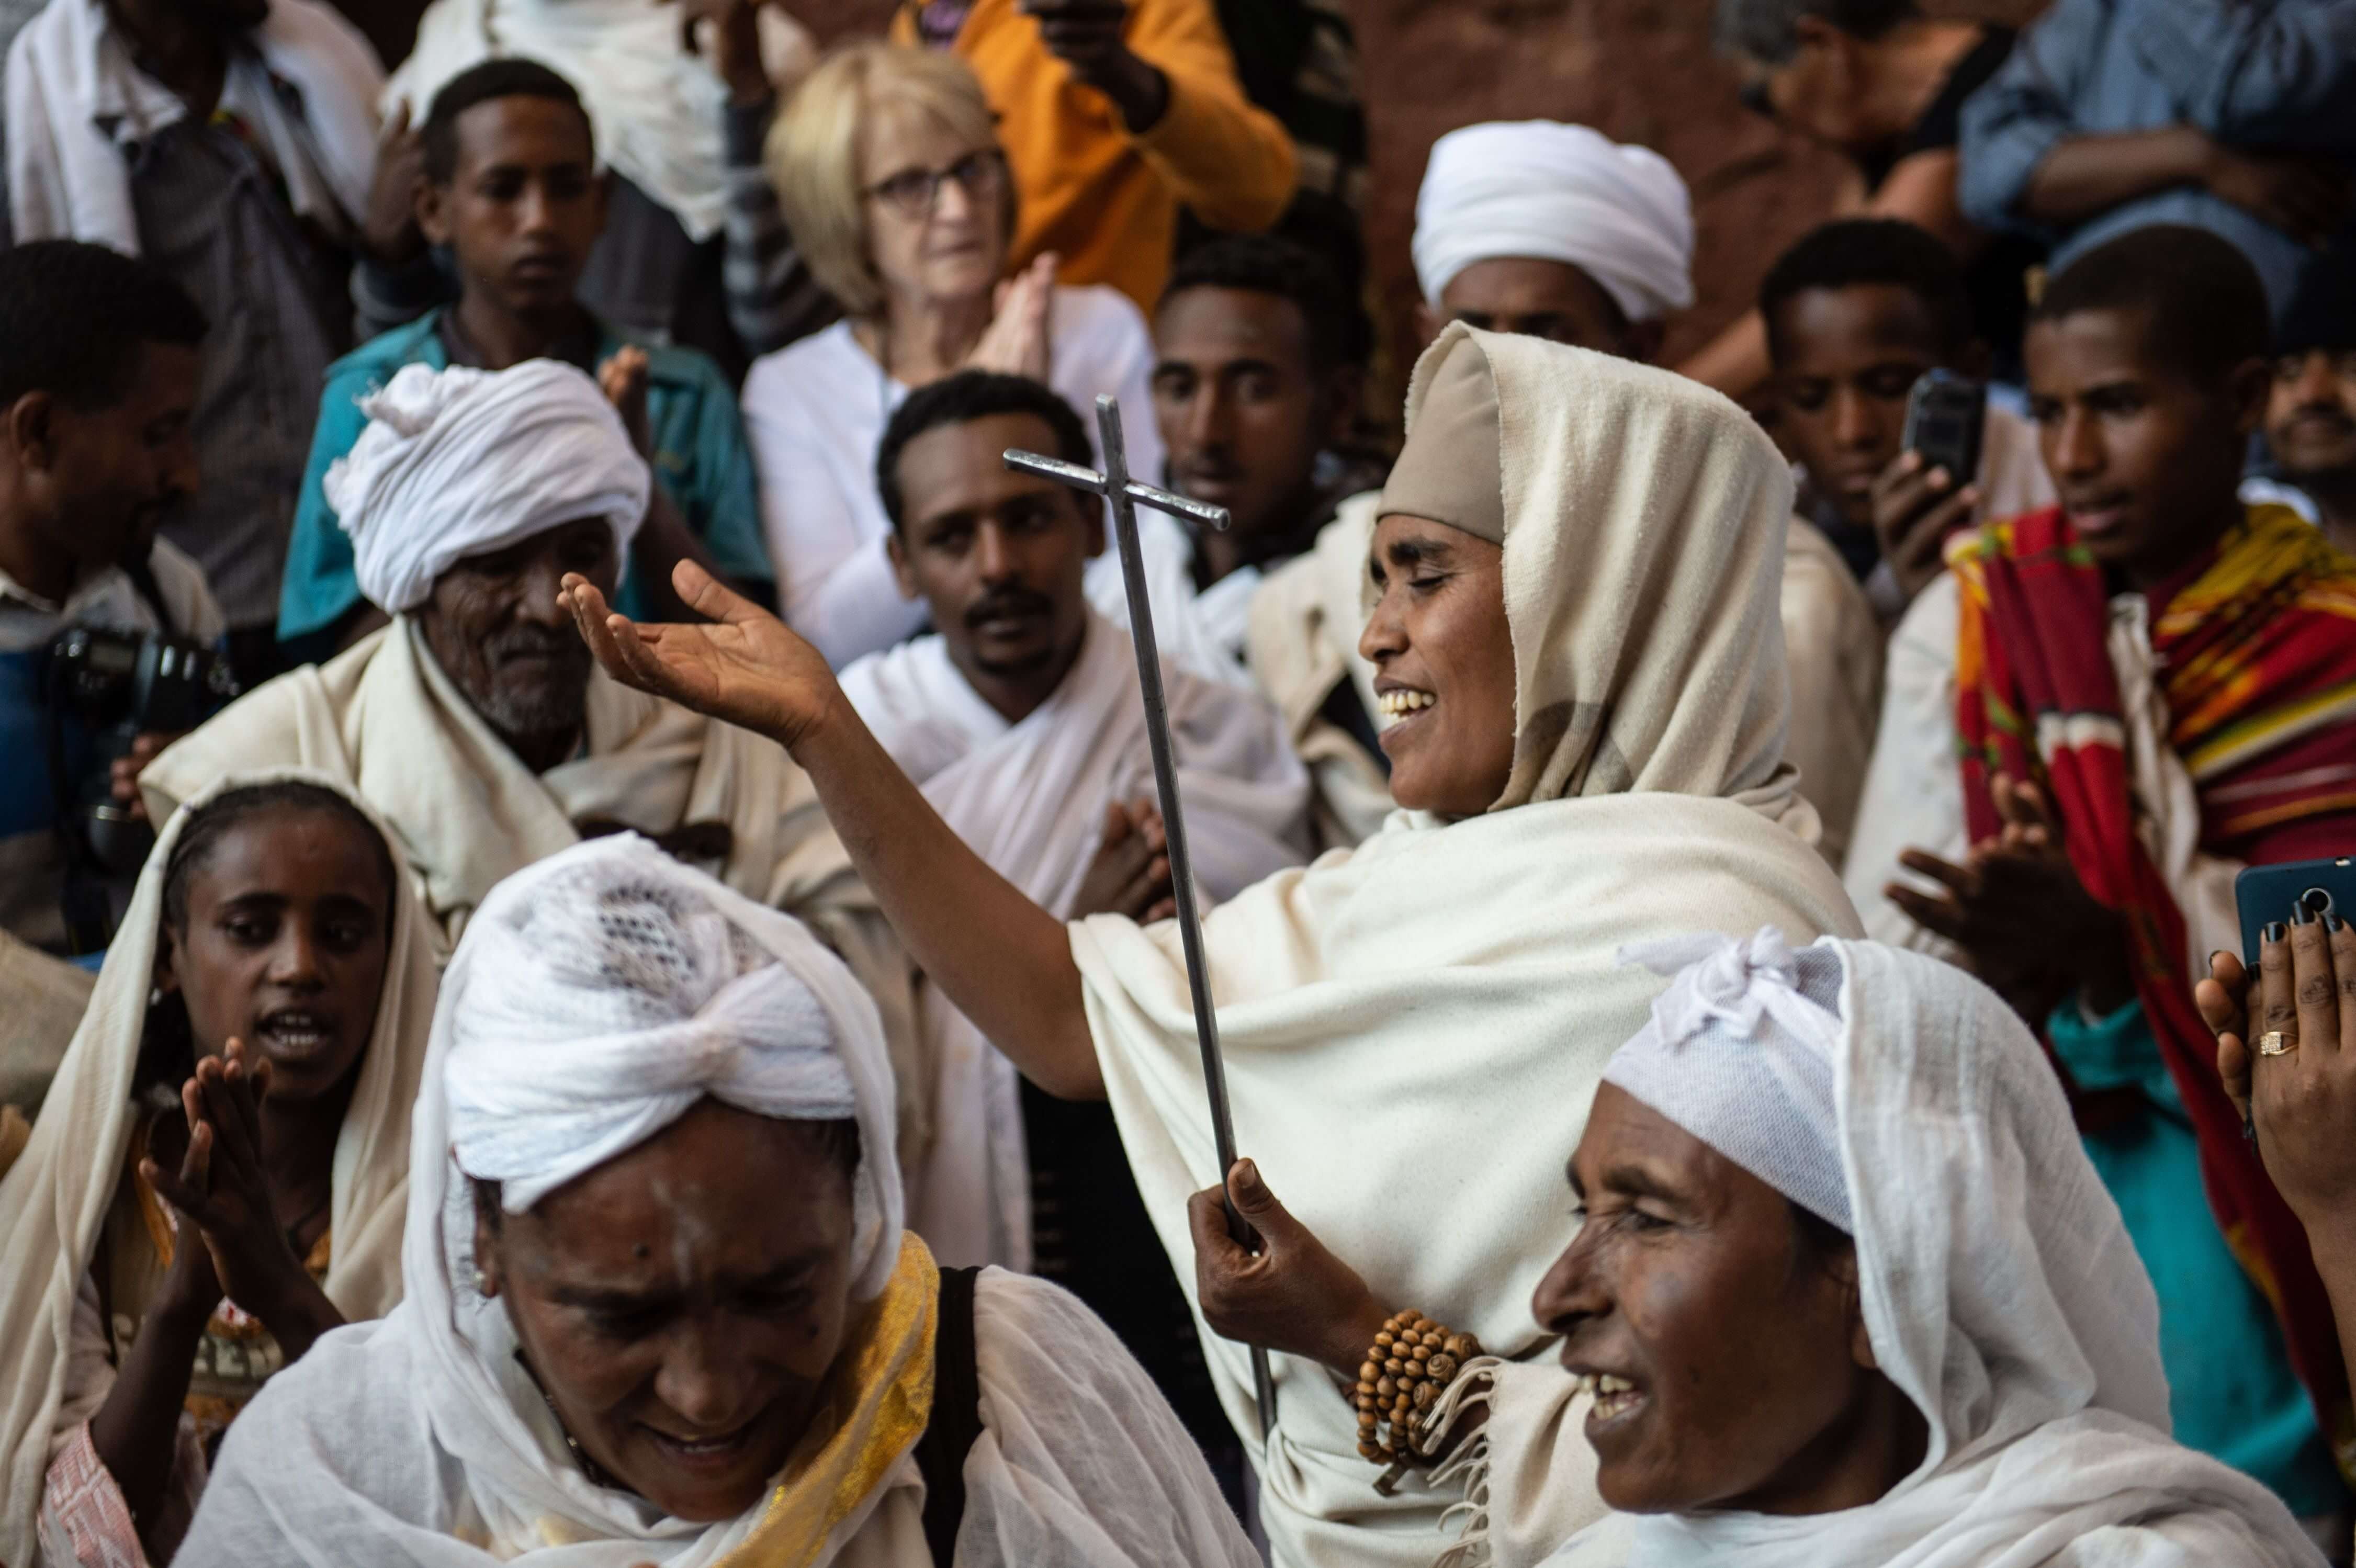 tourhub | YellowWood Adventures | Genna Festival in Ethiopia 